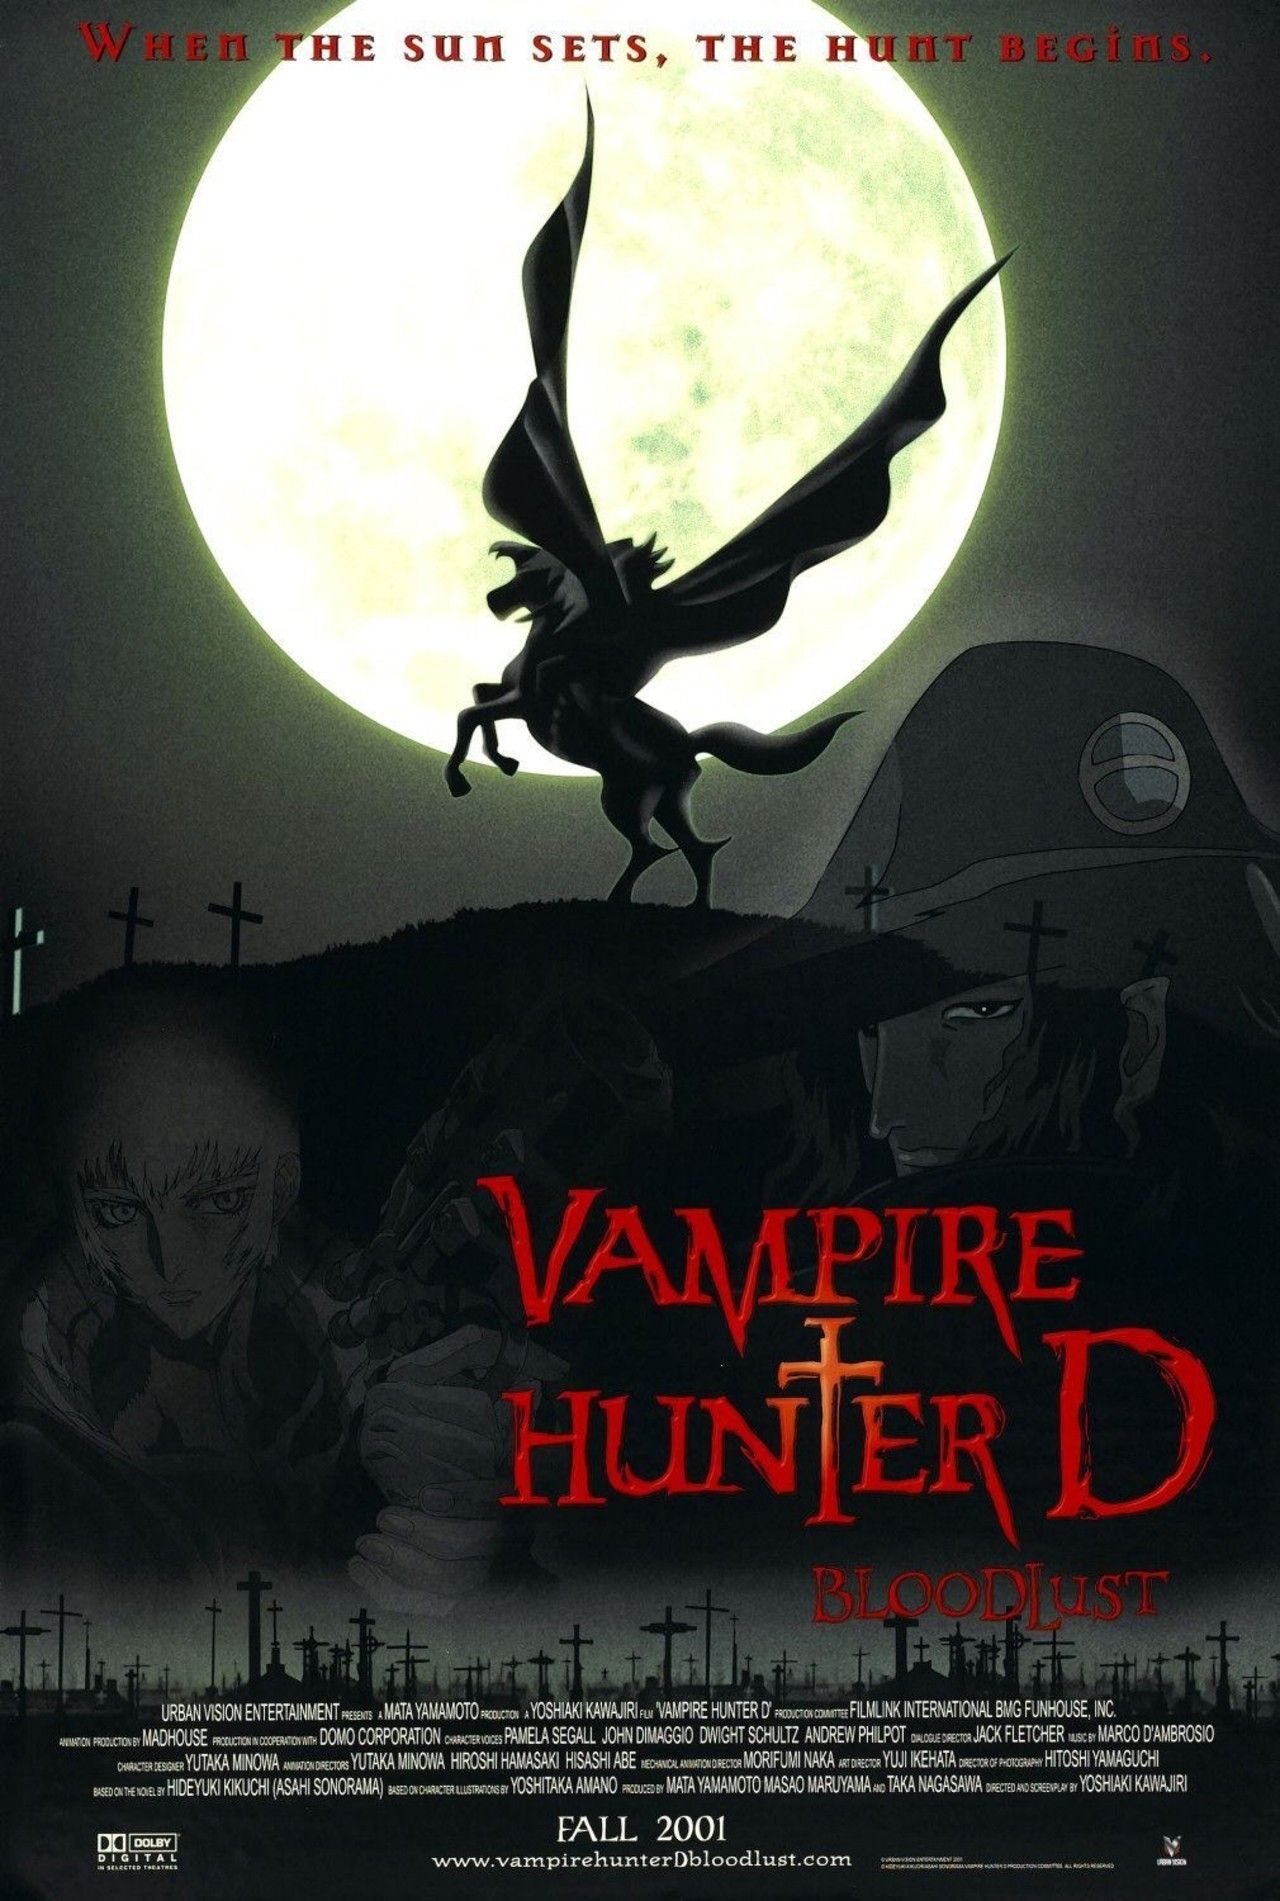 Vampire Hunter D Bloodlust 2 - Japanese Animation Supernatural Horror Movie  Dvd - Physical